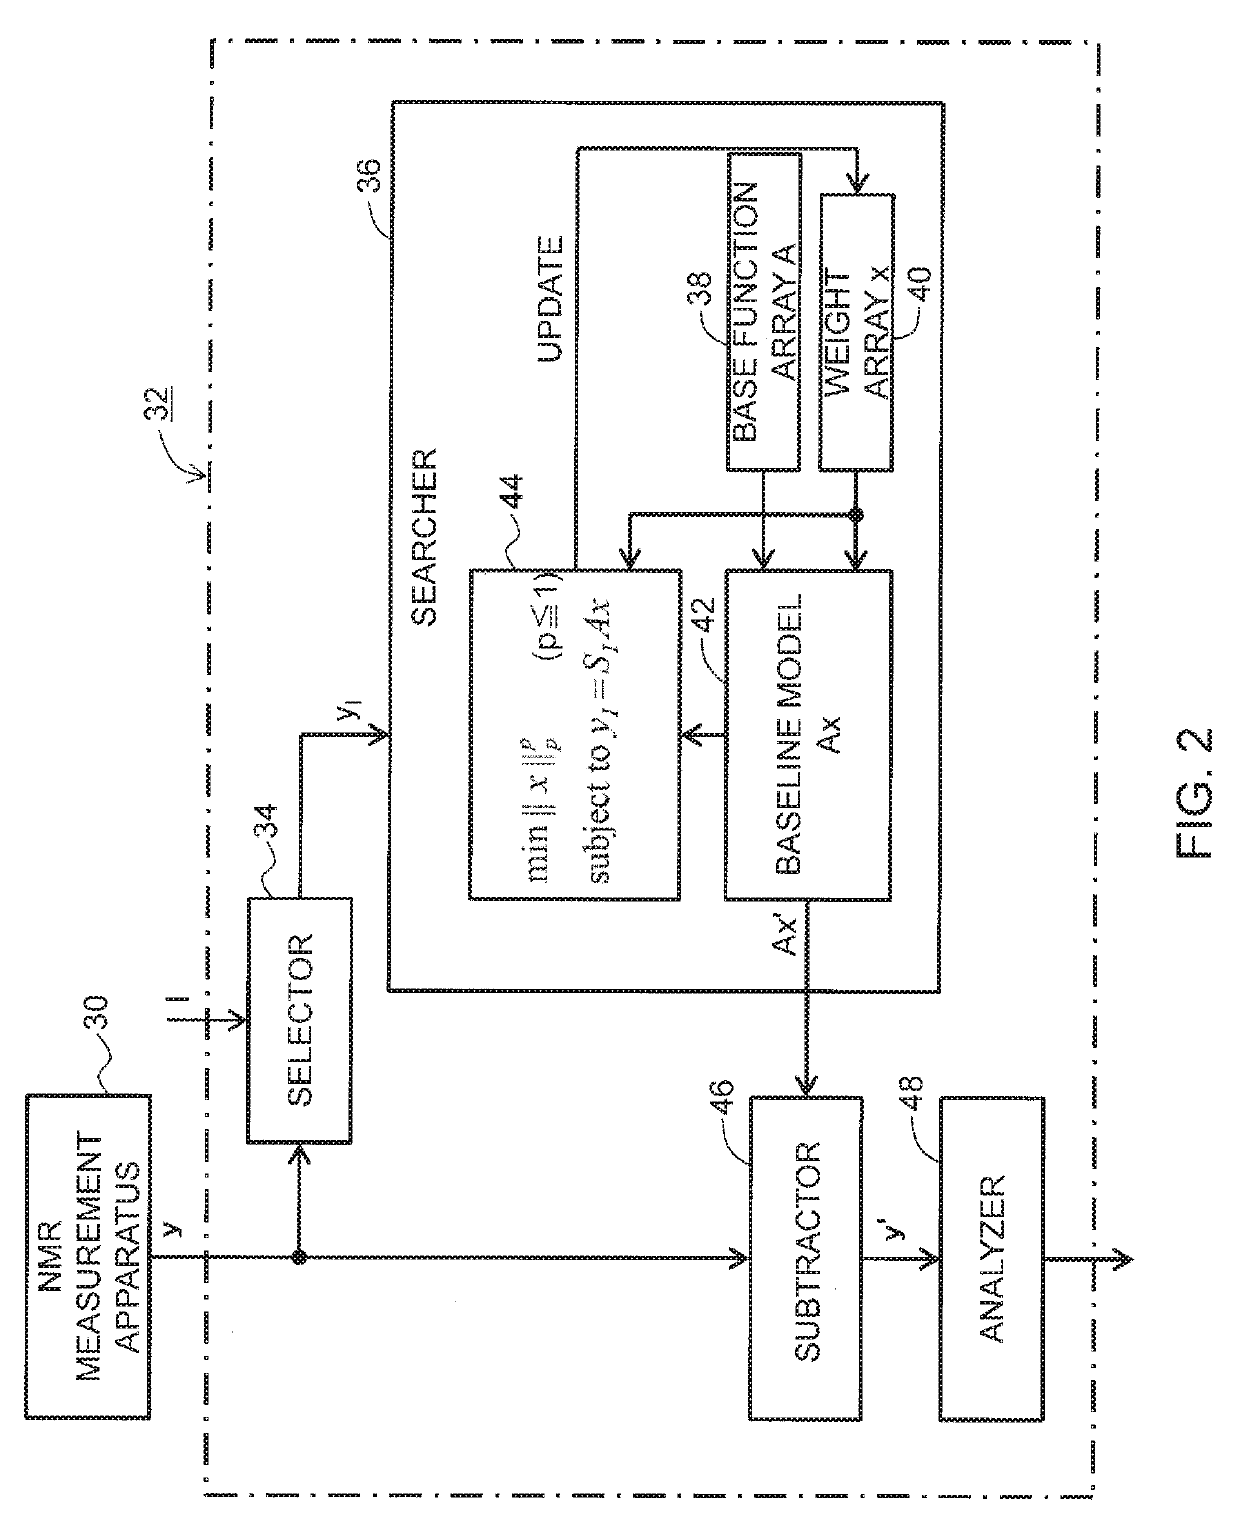 Apparatus and Method for Processing Spectrum